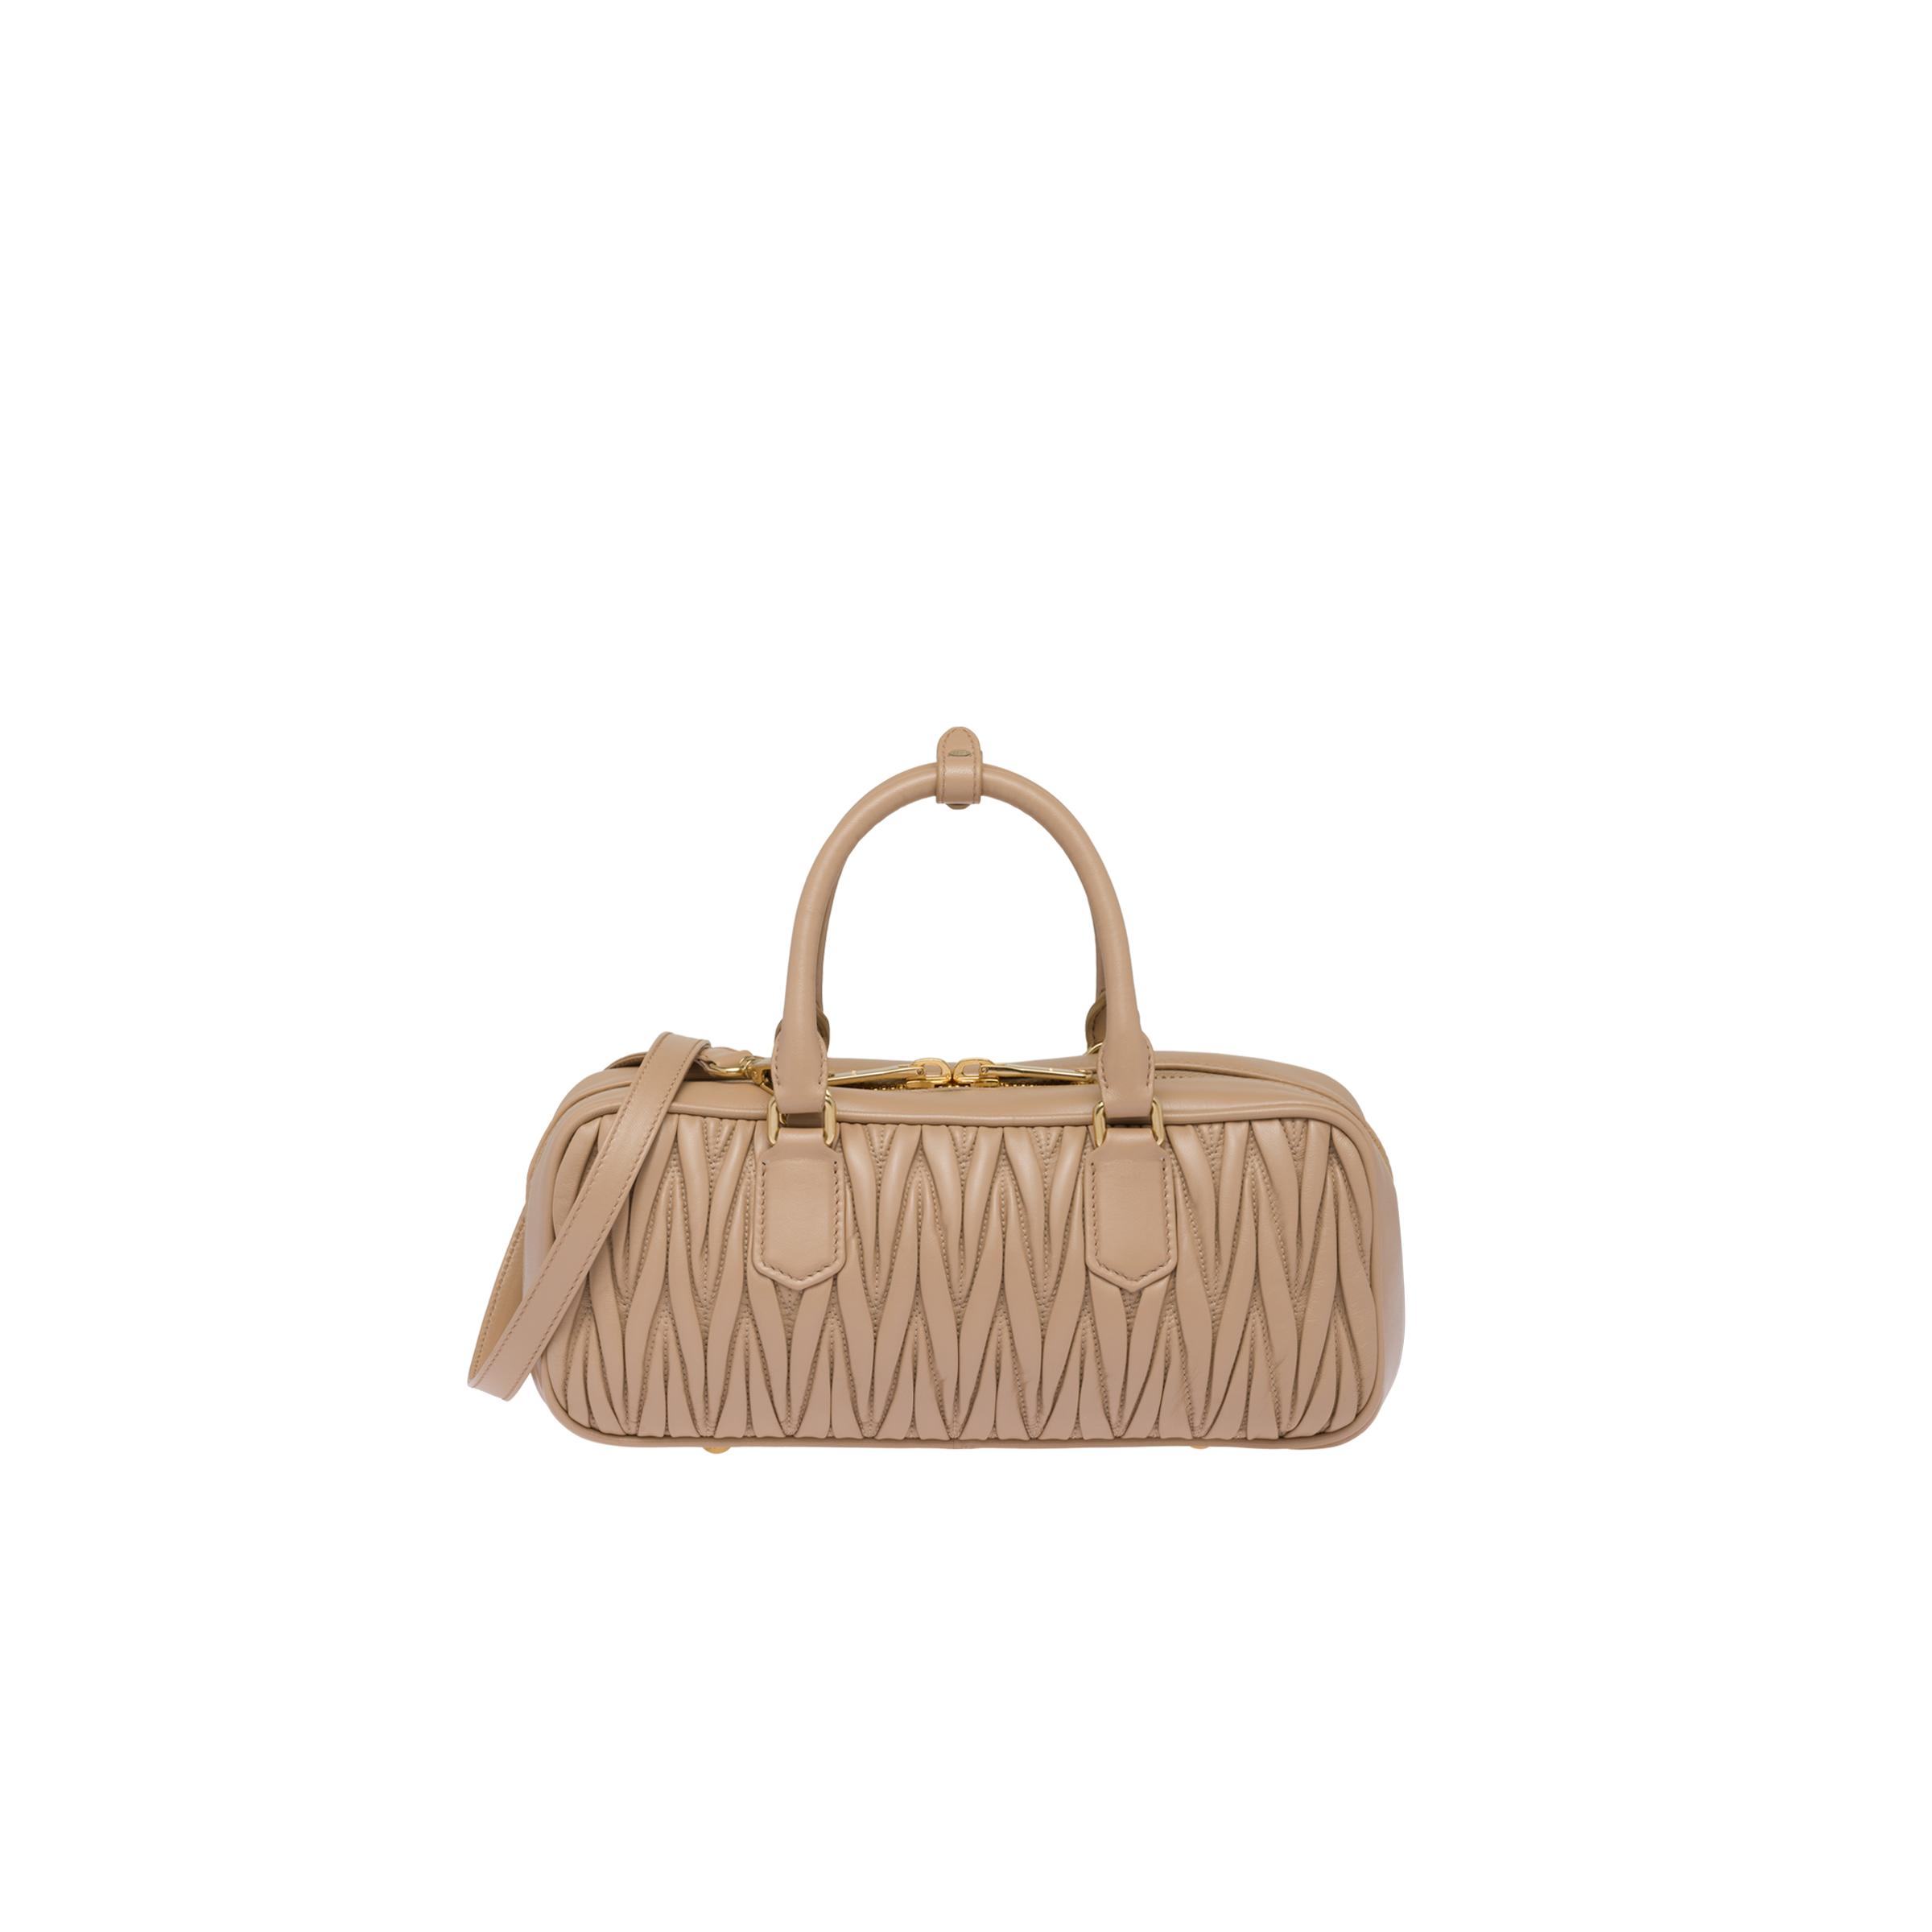 Tell me your thoughts on this Miu Miu bag? : r/handbags